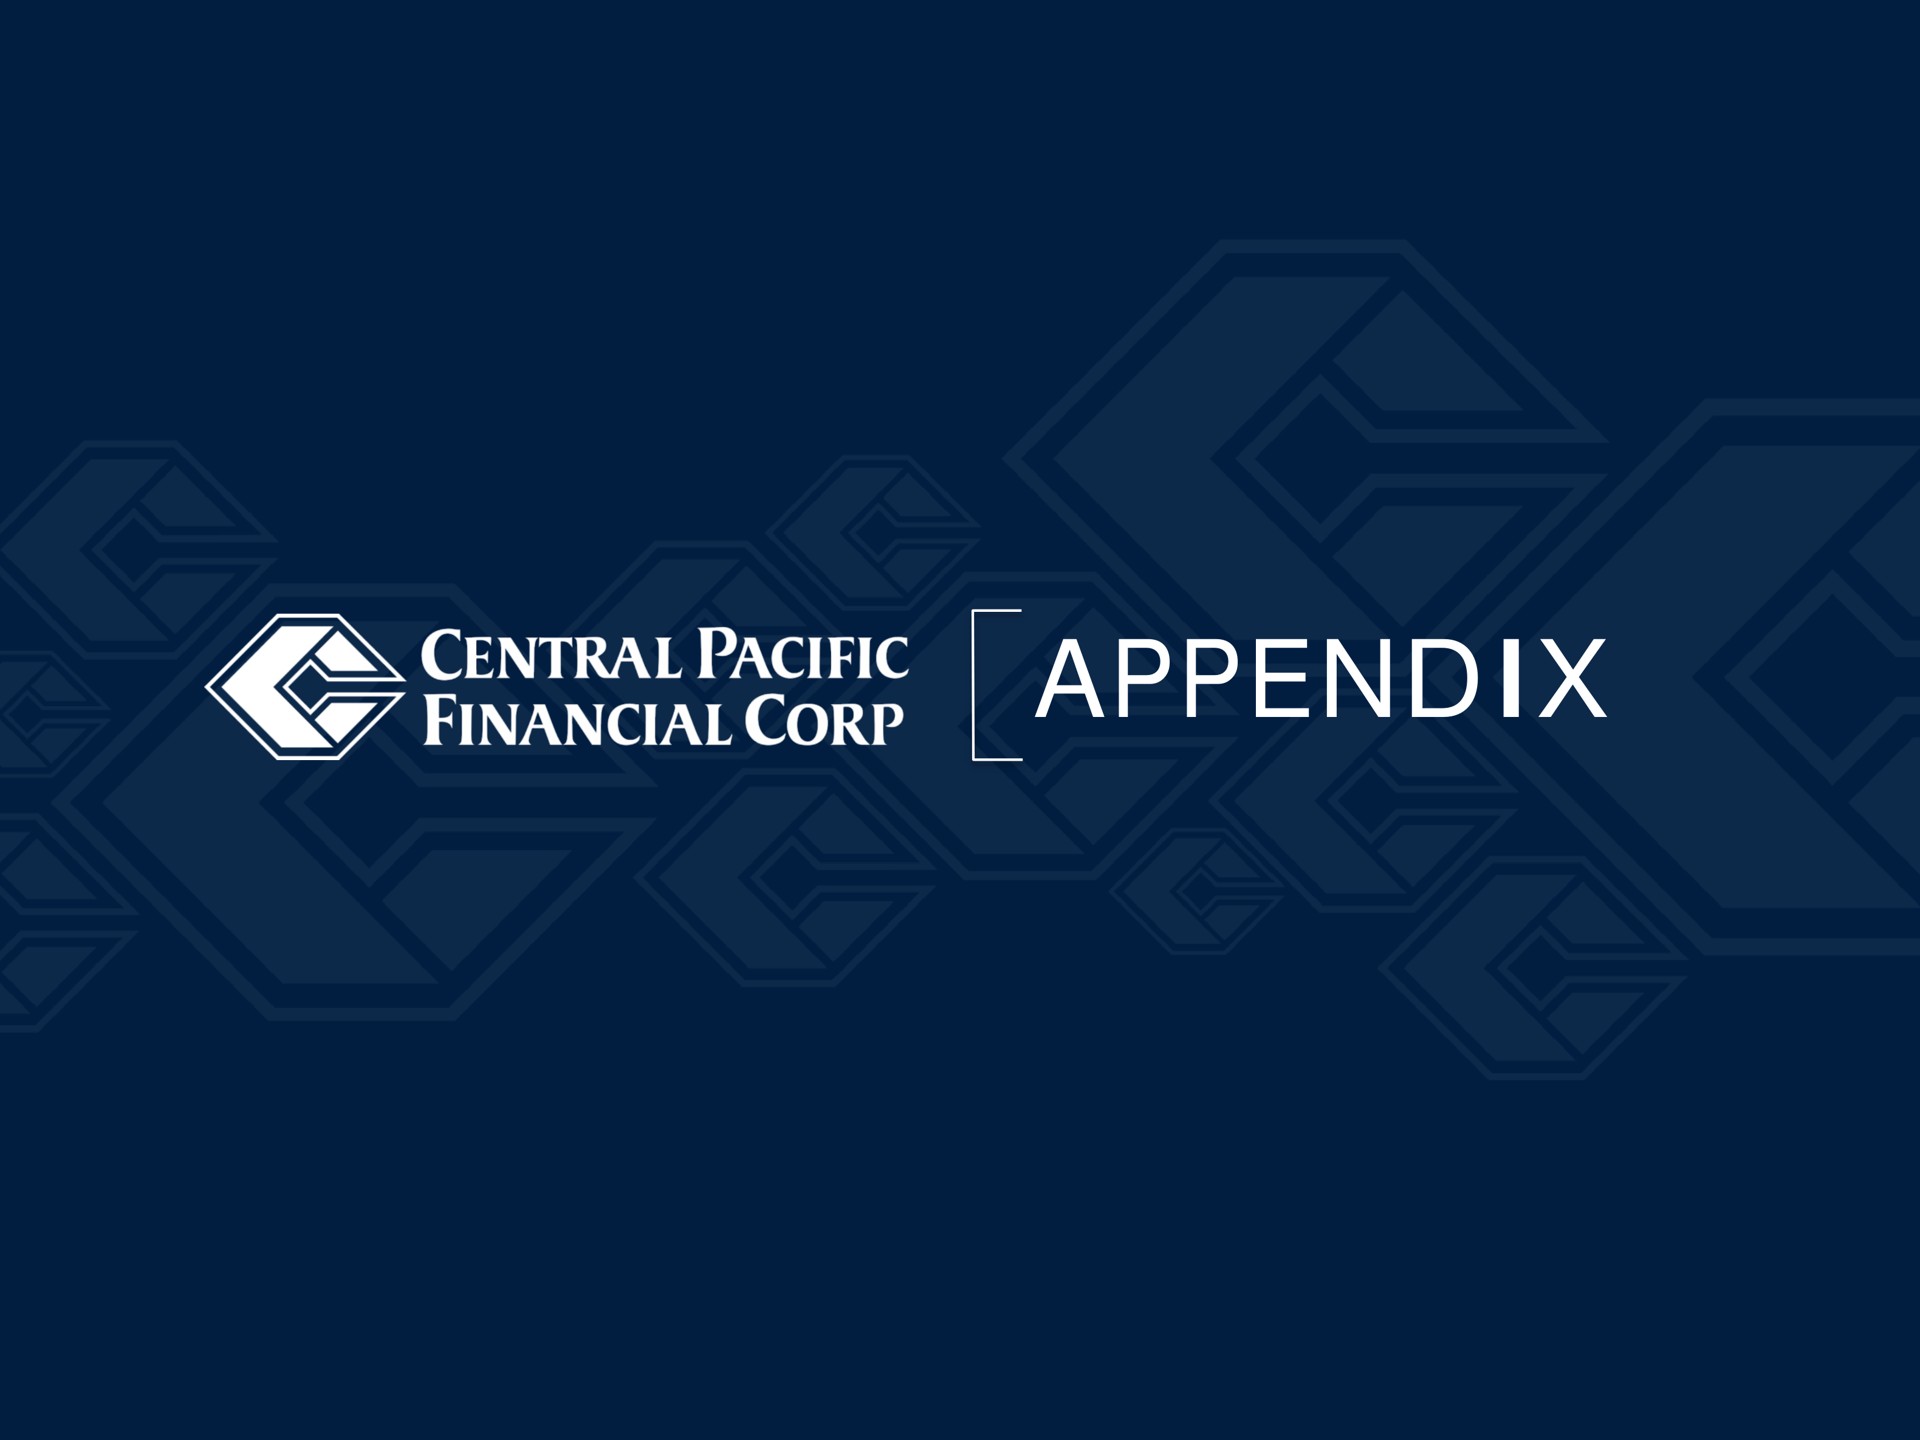 a appendix central pacific financial corp | Central Pacific Financial